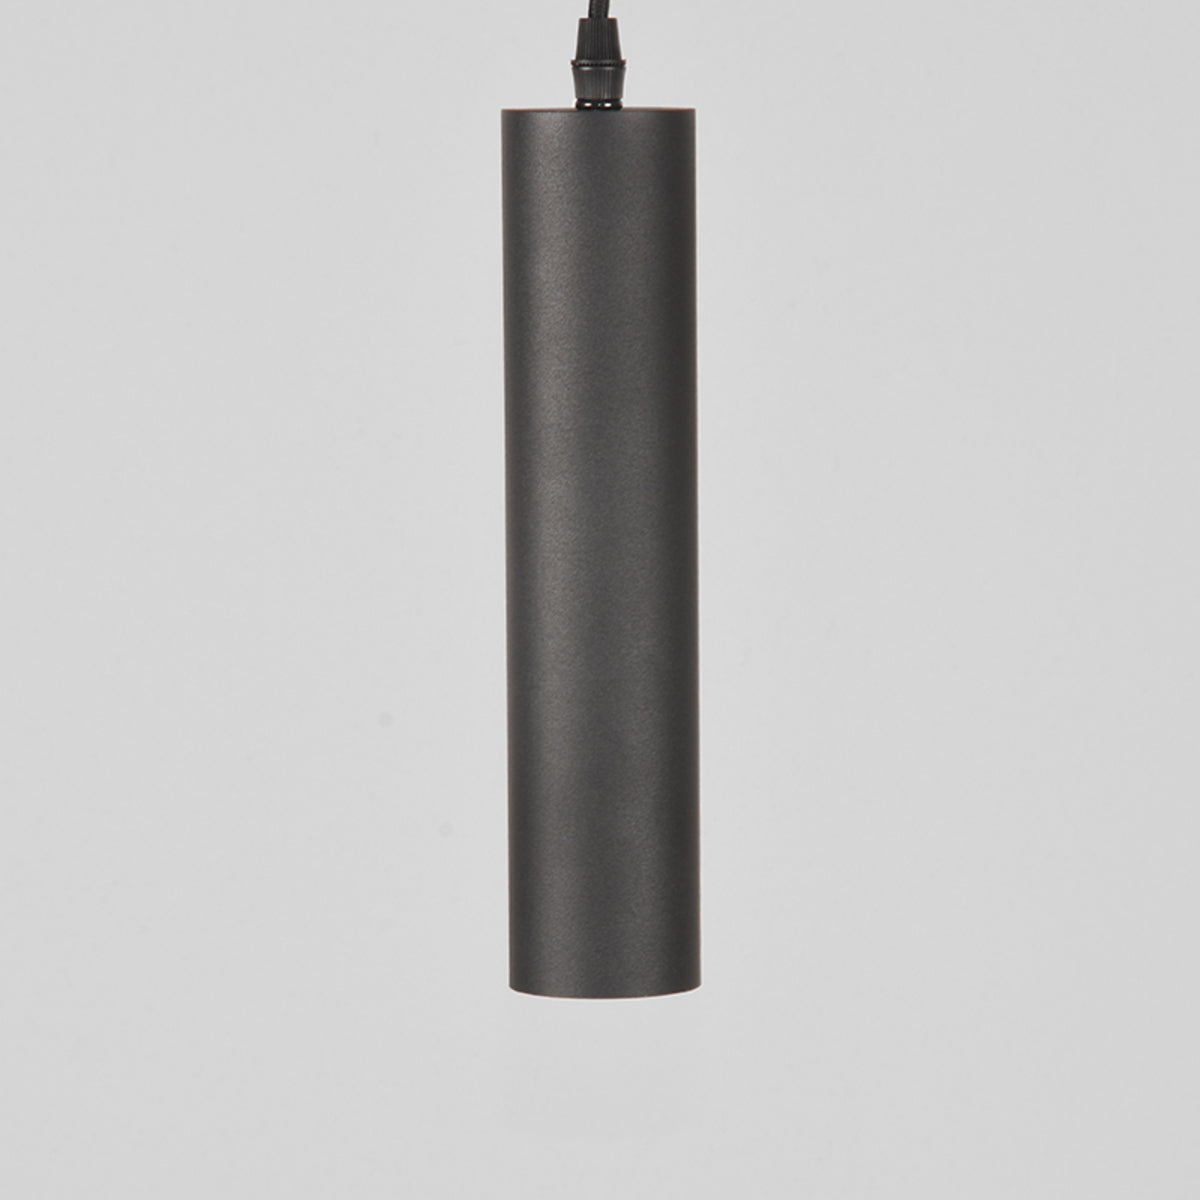 LABEL51 Hanging lamp Ferroli - Black - Metal - 1-light